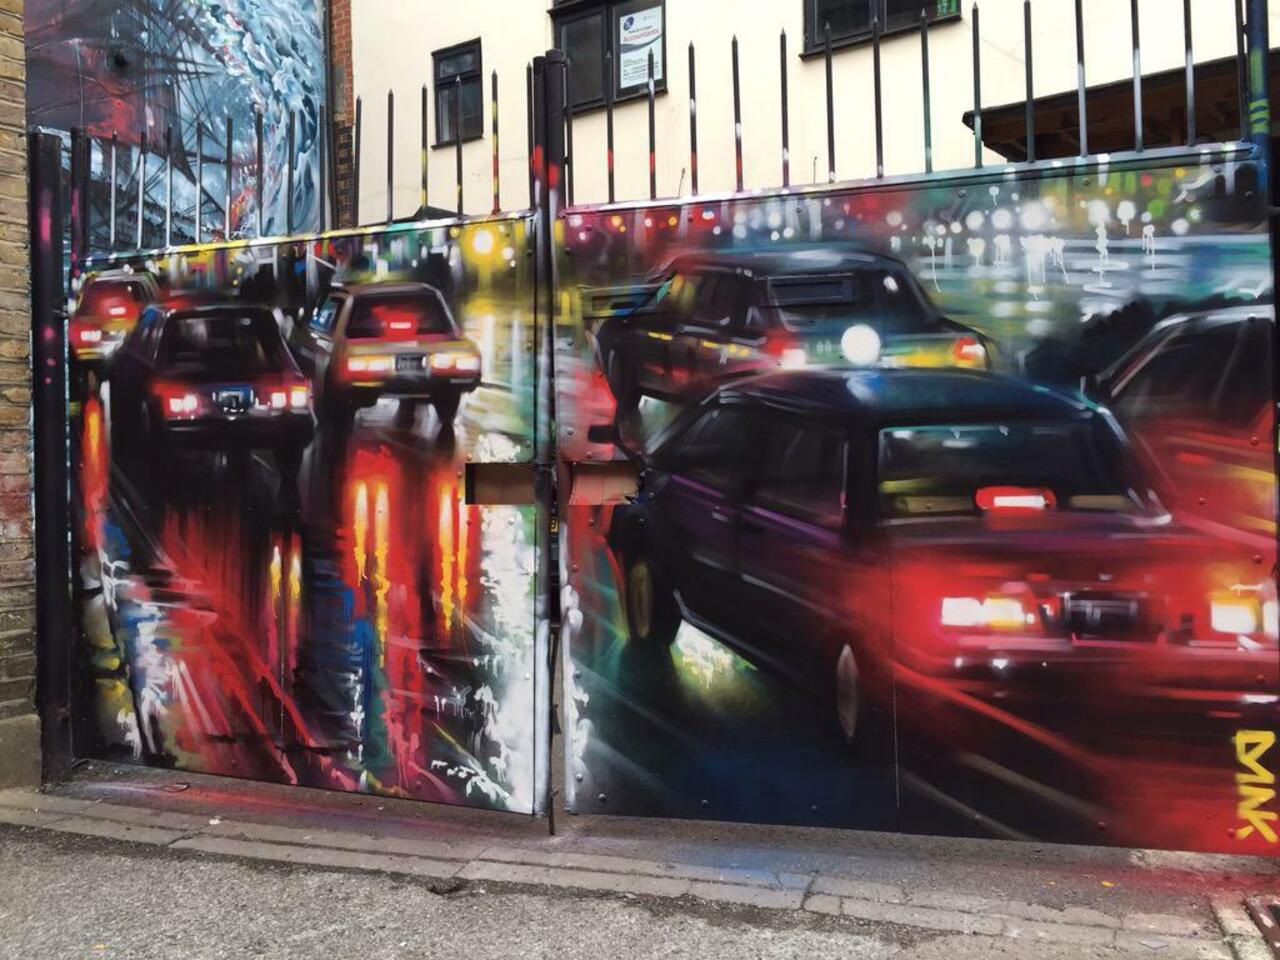 New Street Art by DanKitchener in Brick Lane London 

#art #graffiti #mural #streetart http://t.co/Bkbhmps56j